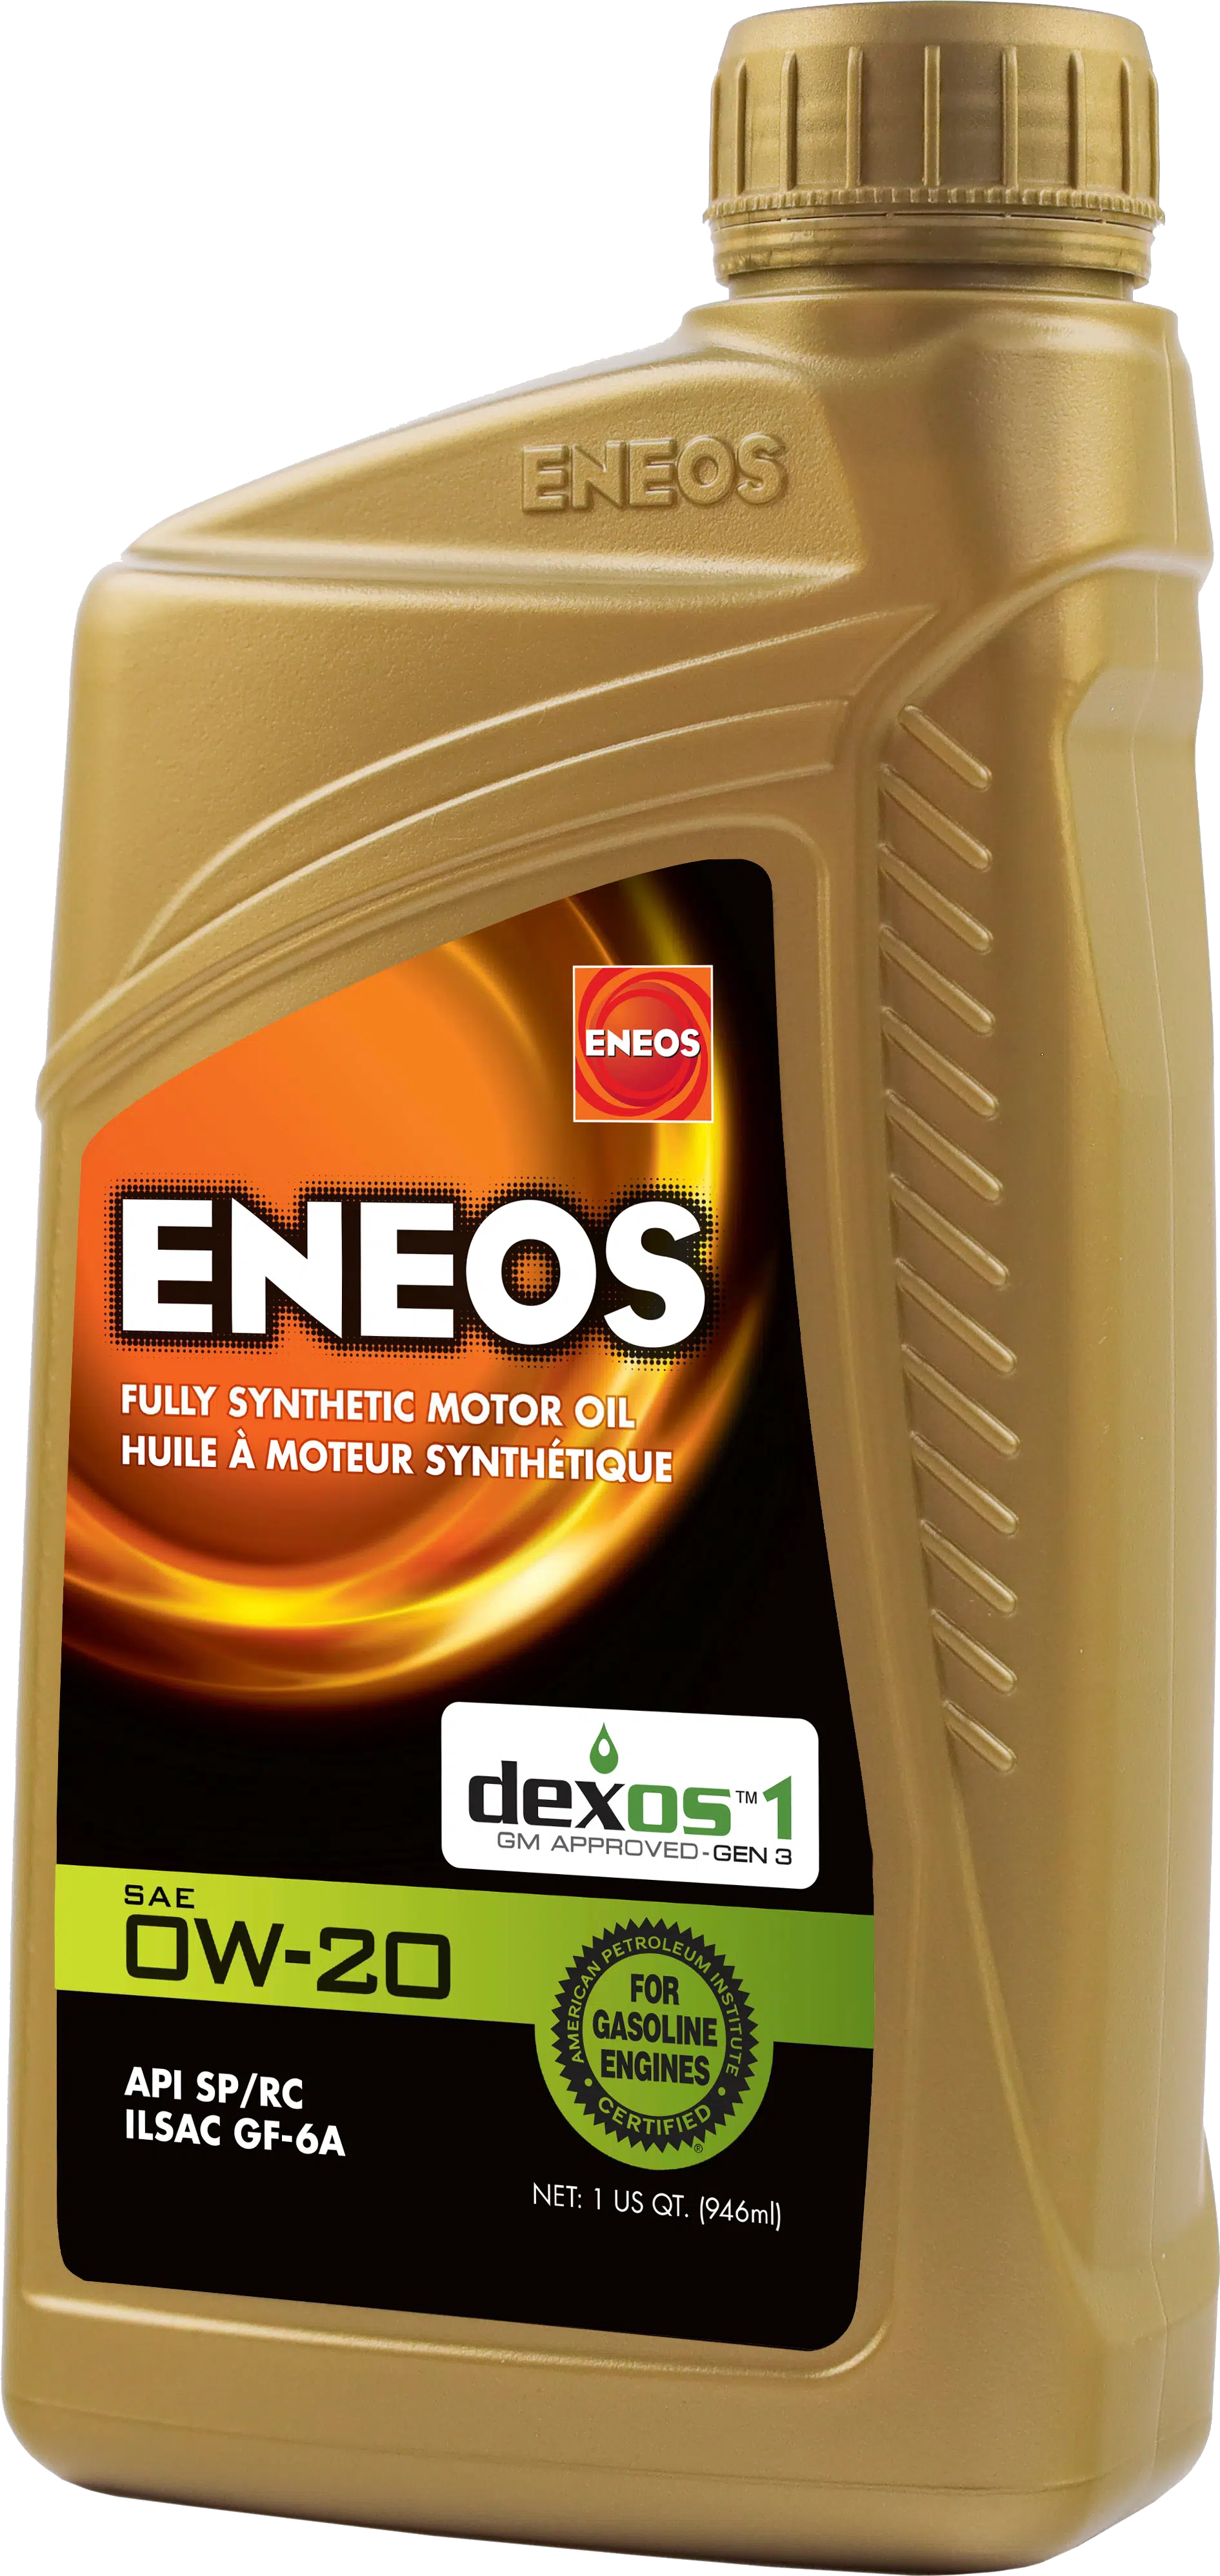 1 Quart bottle of ENEOS 0W-20 synthetic oil